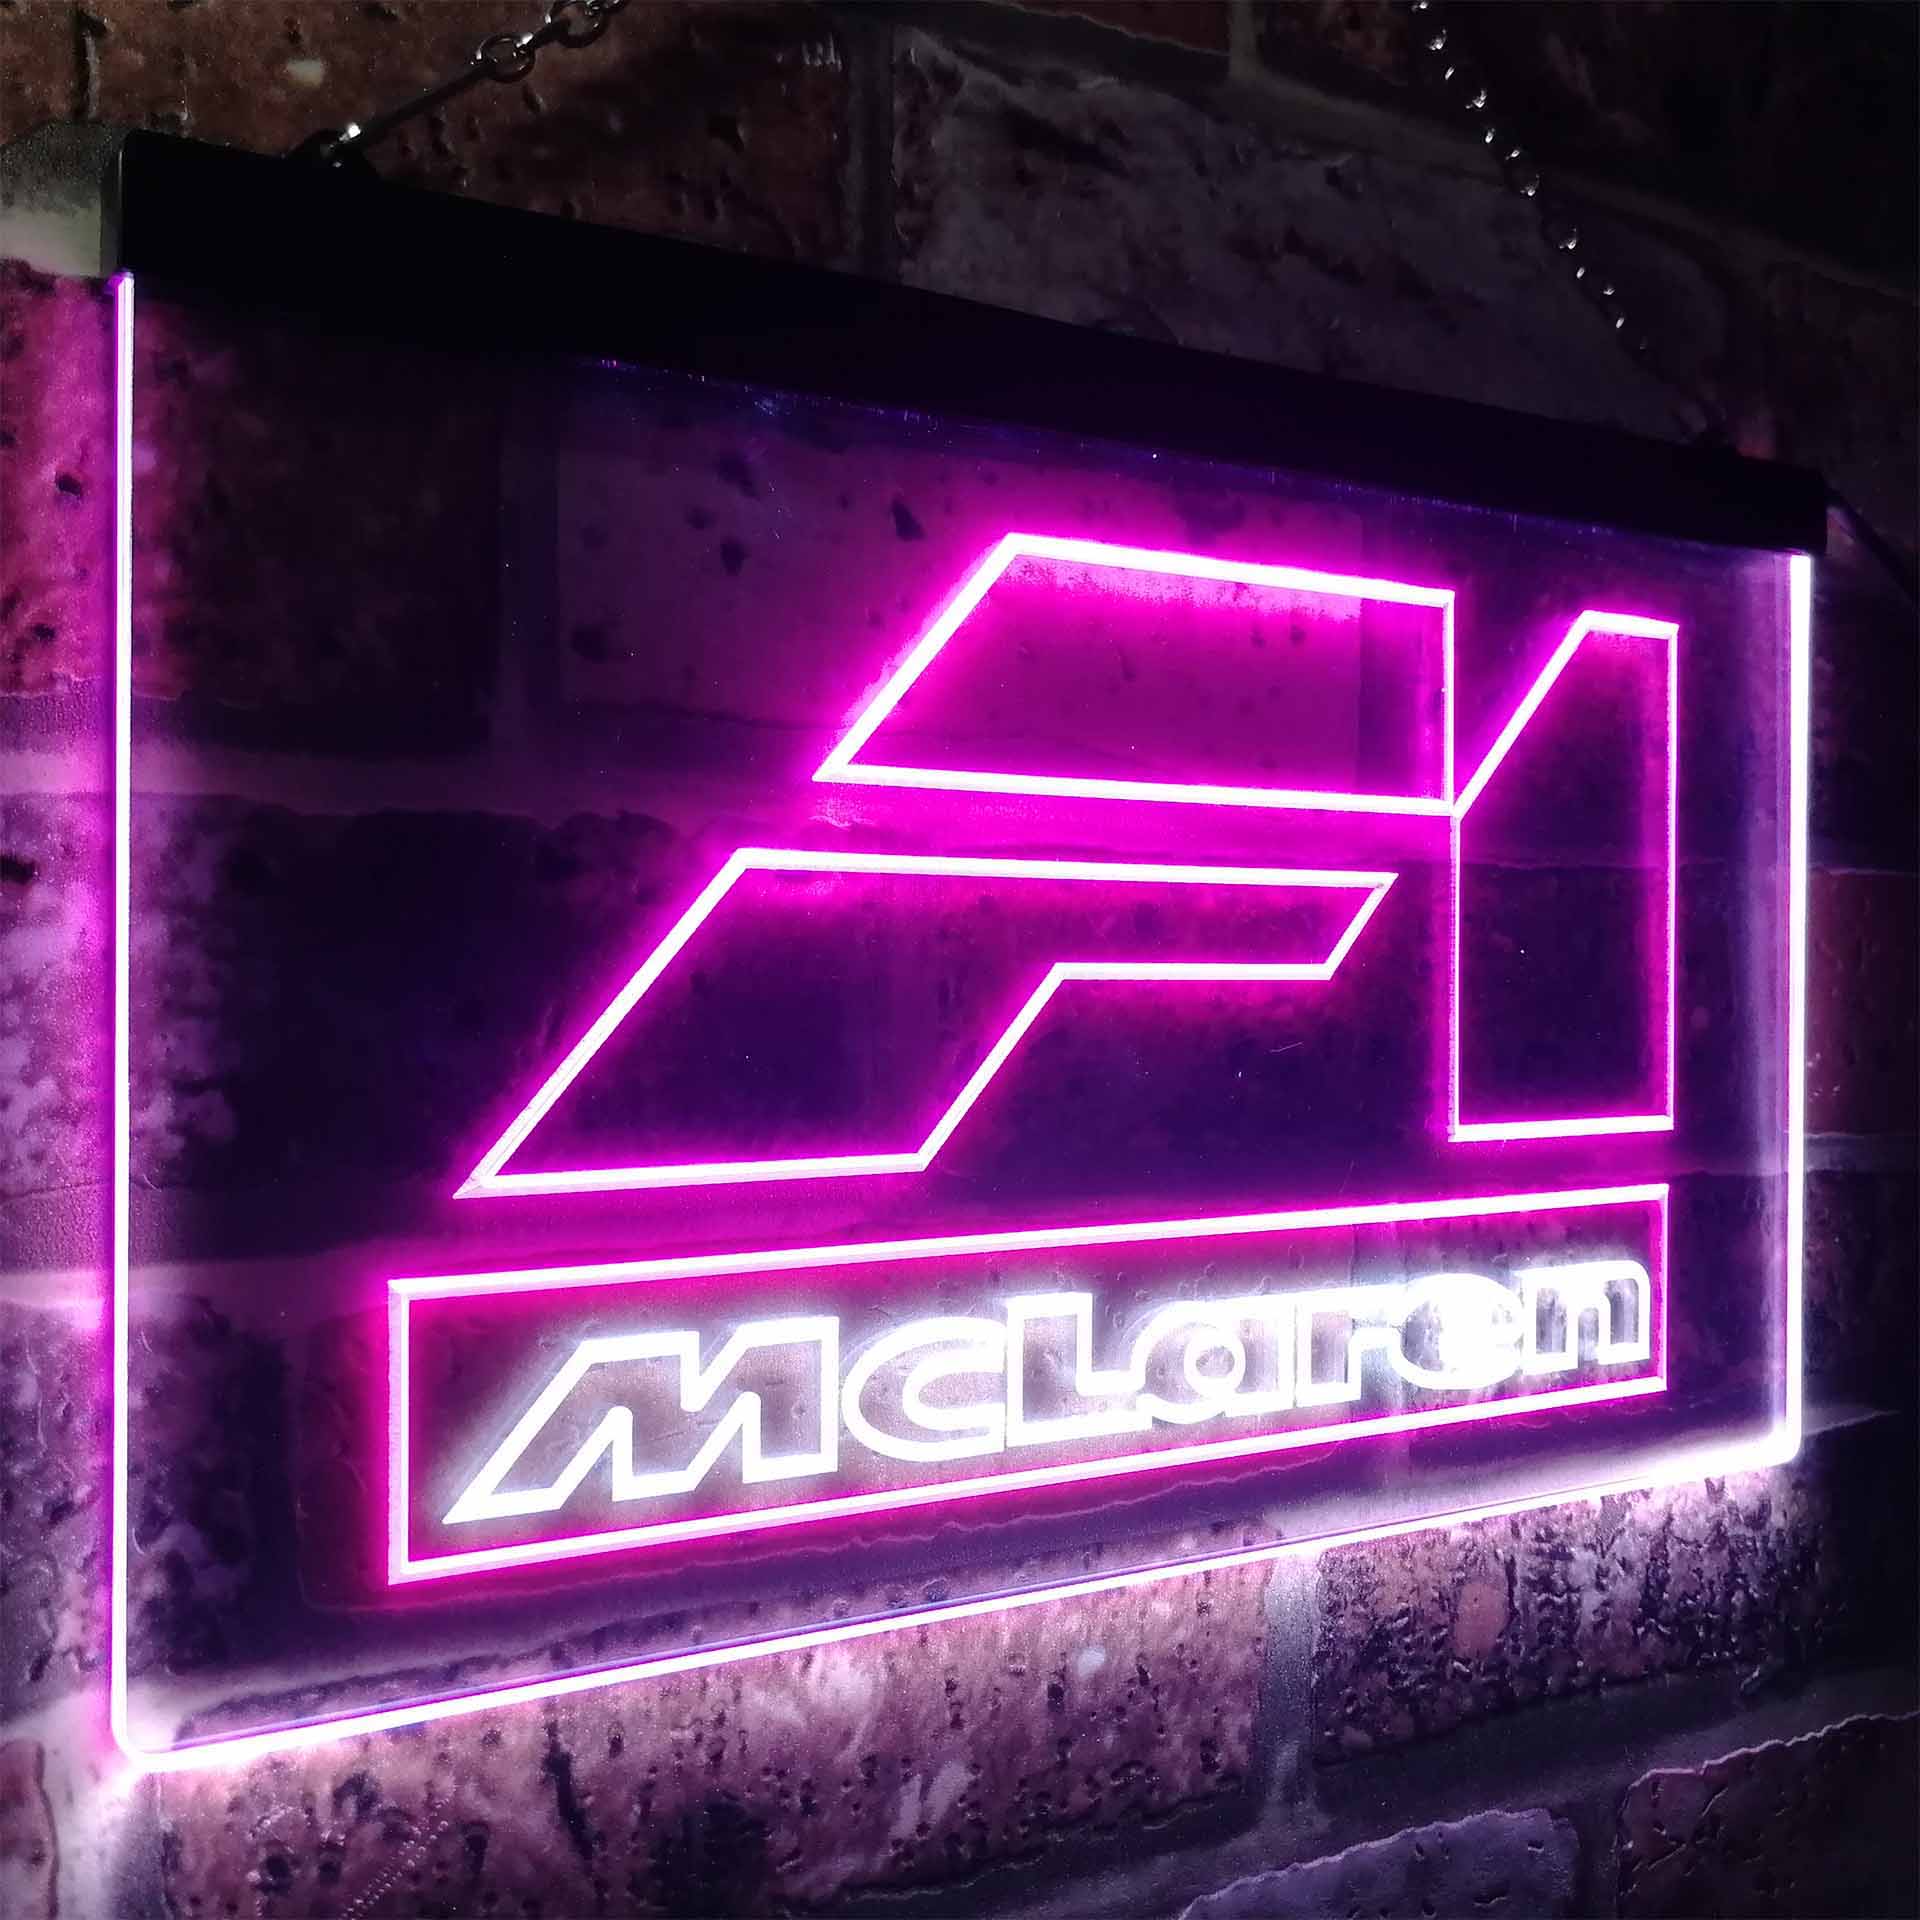 Mclaren F1 Car LED Neon Sign